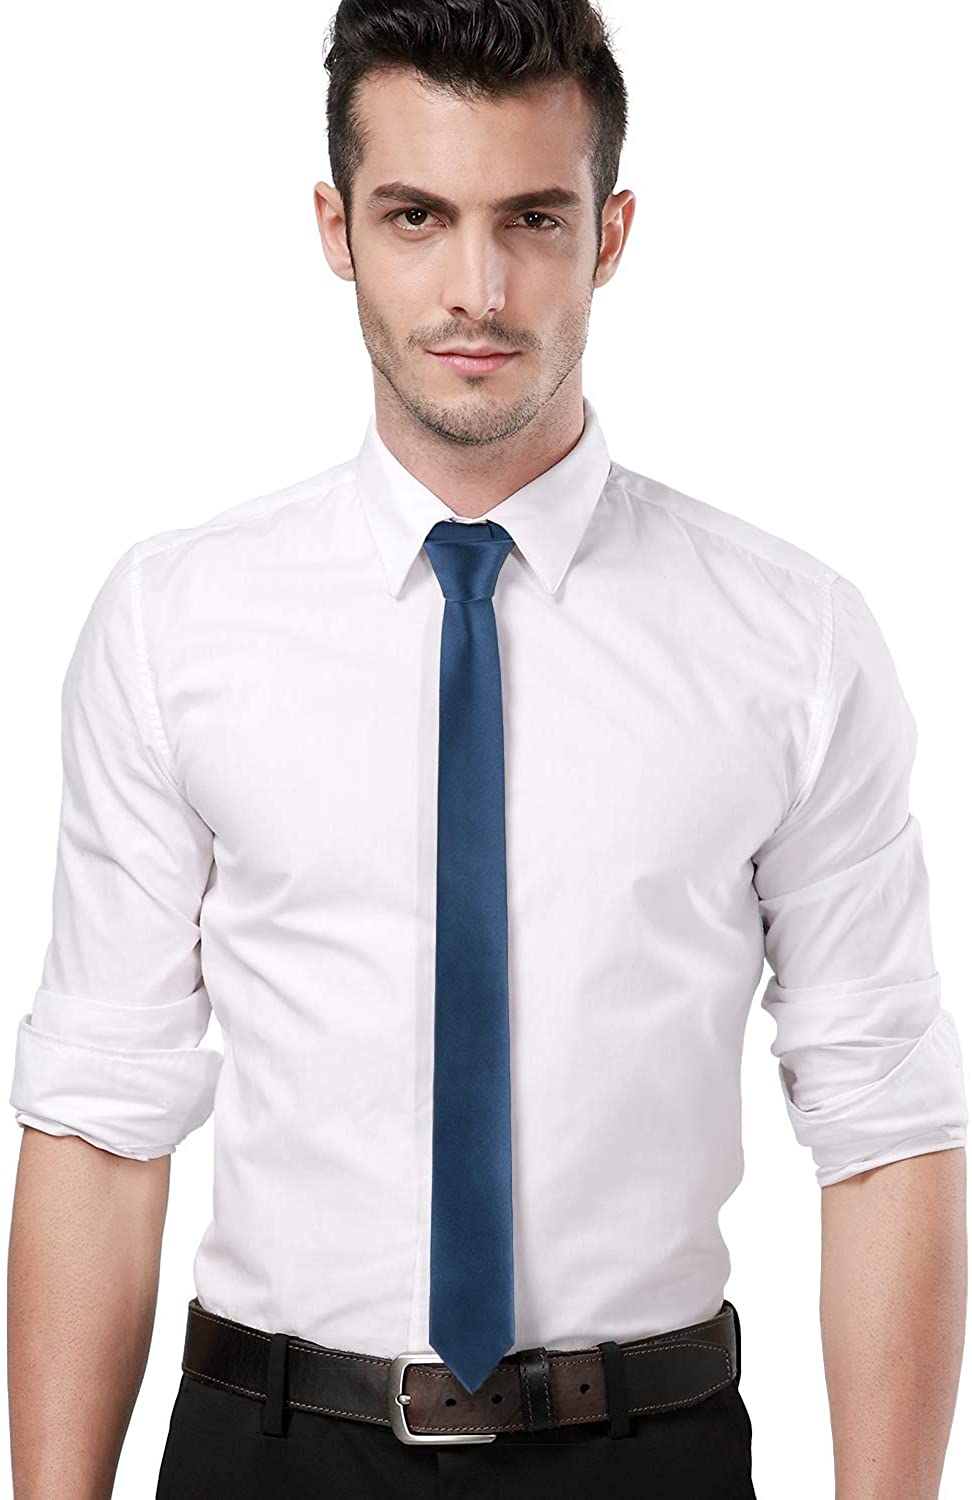  Starry Sky Men's Tie Classic Skinny Tie Personalized Slim  Necktie for Office Wedding Party : Sports & Outdoors